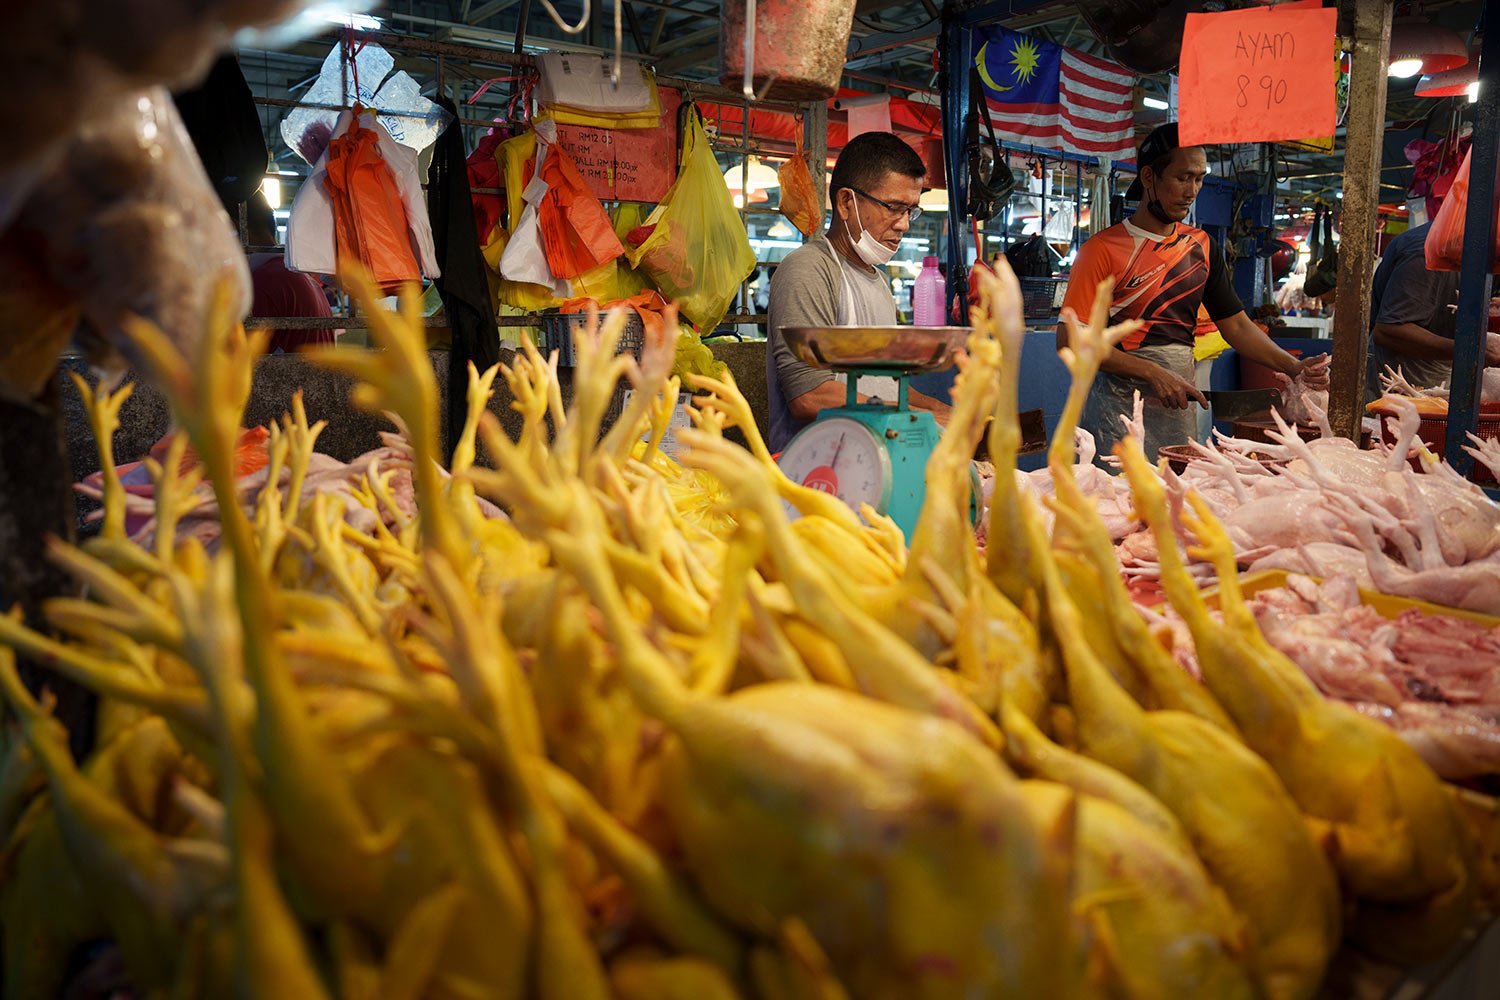  A seller prepares freshly butchered chickens at the Kampung Baru wet market in Kuala Lumpur, Malaysia, Tuesday, May 31, 2022. (AP Photo/Vincent Thian) 